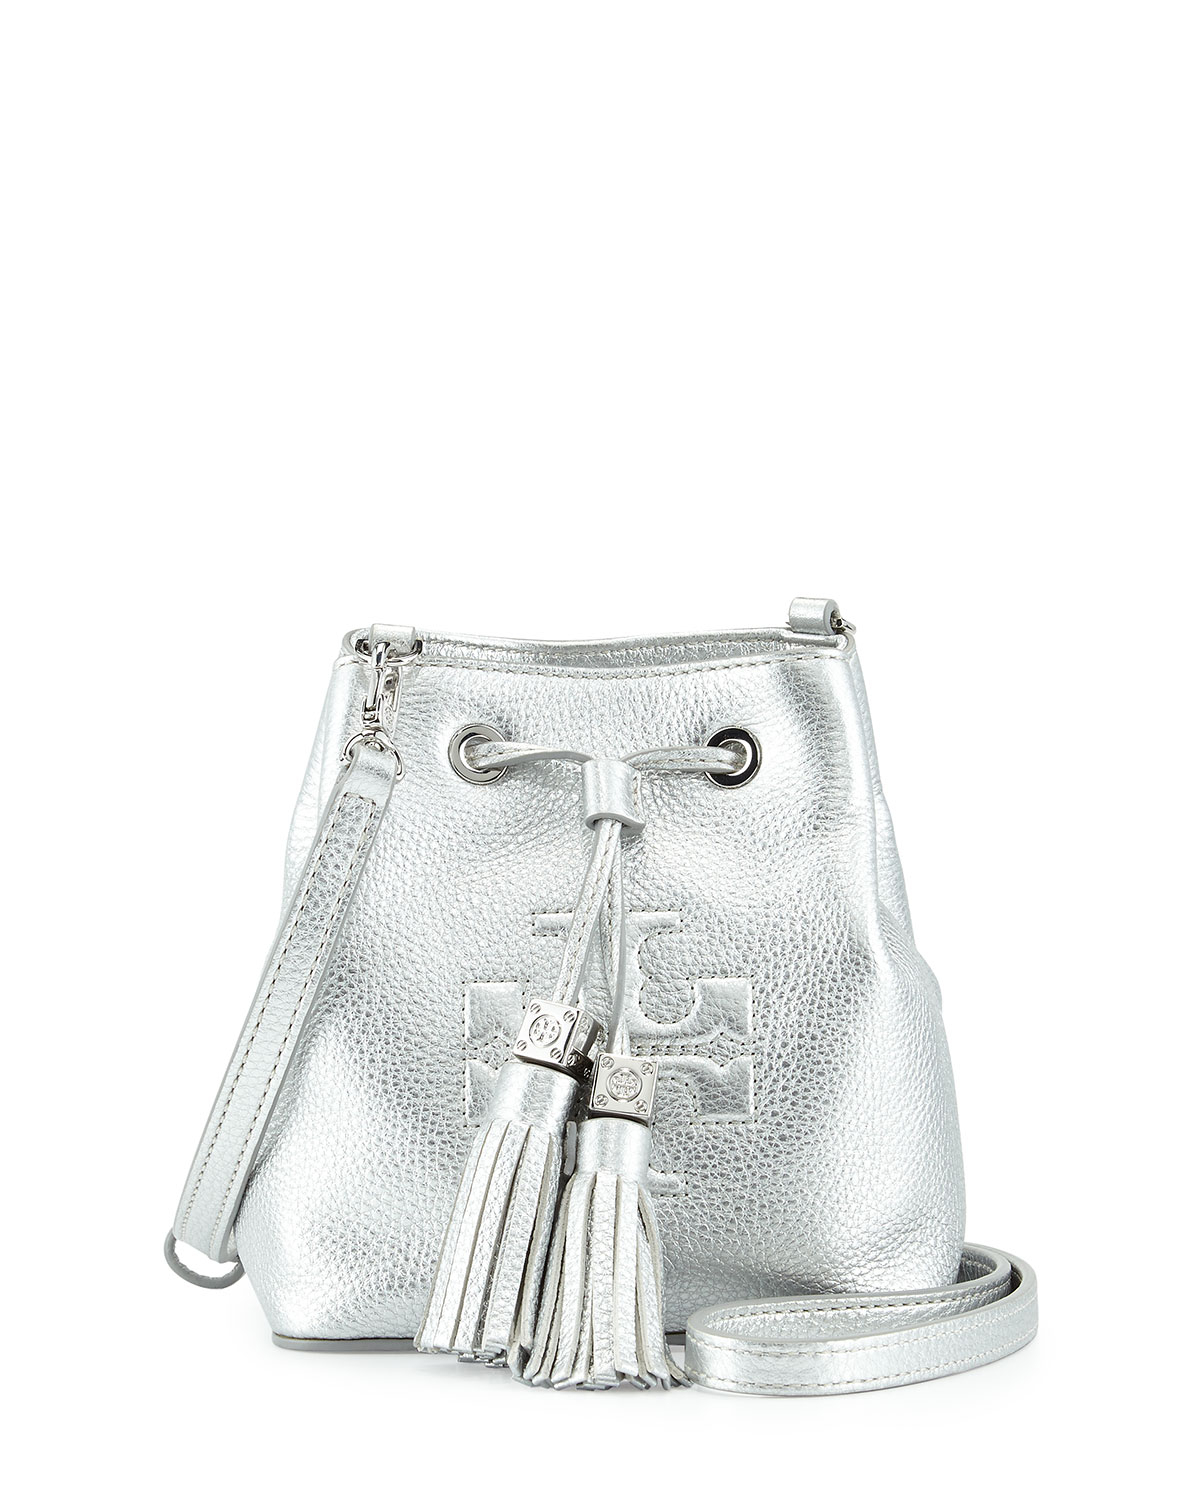 Tory Burch Thea Mini Crossbody Bucket Bag in Silver (Metallic) - Lyst